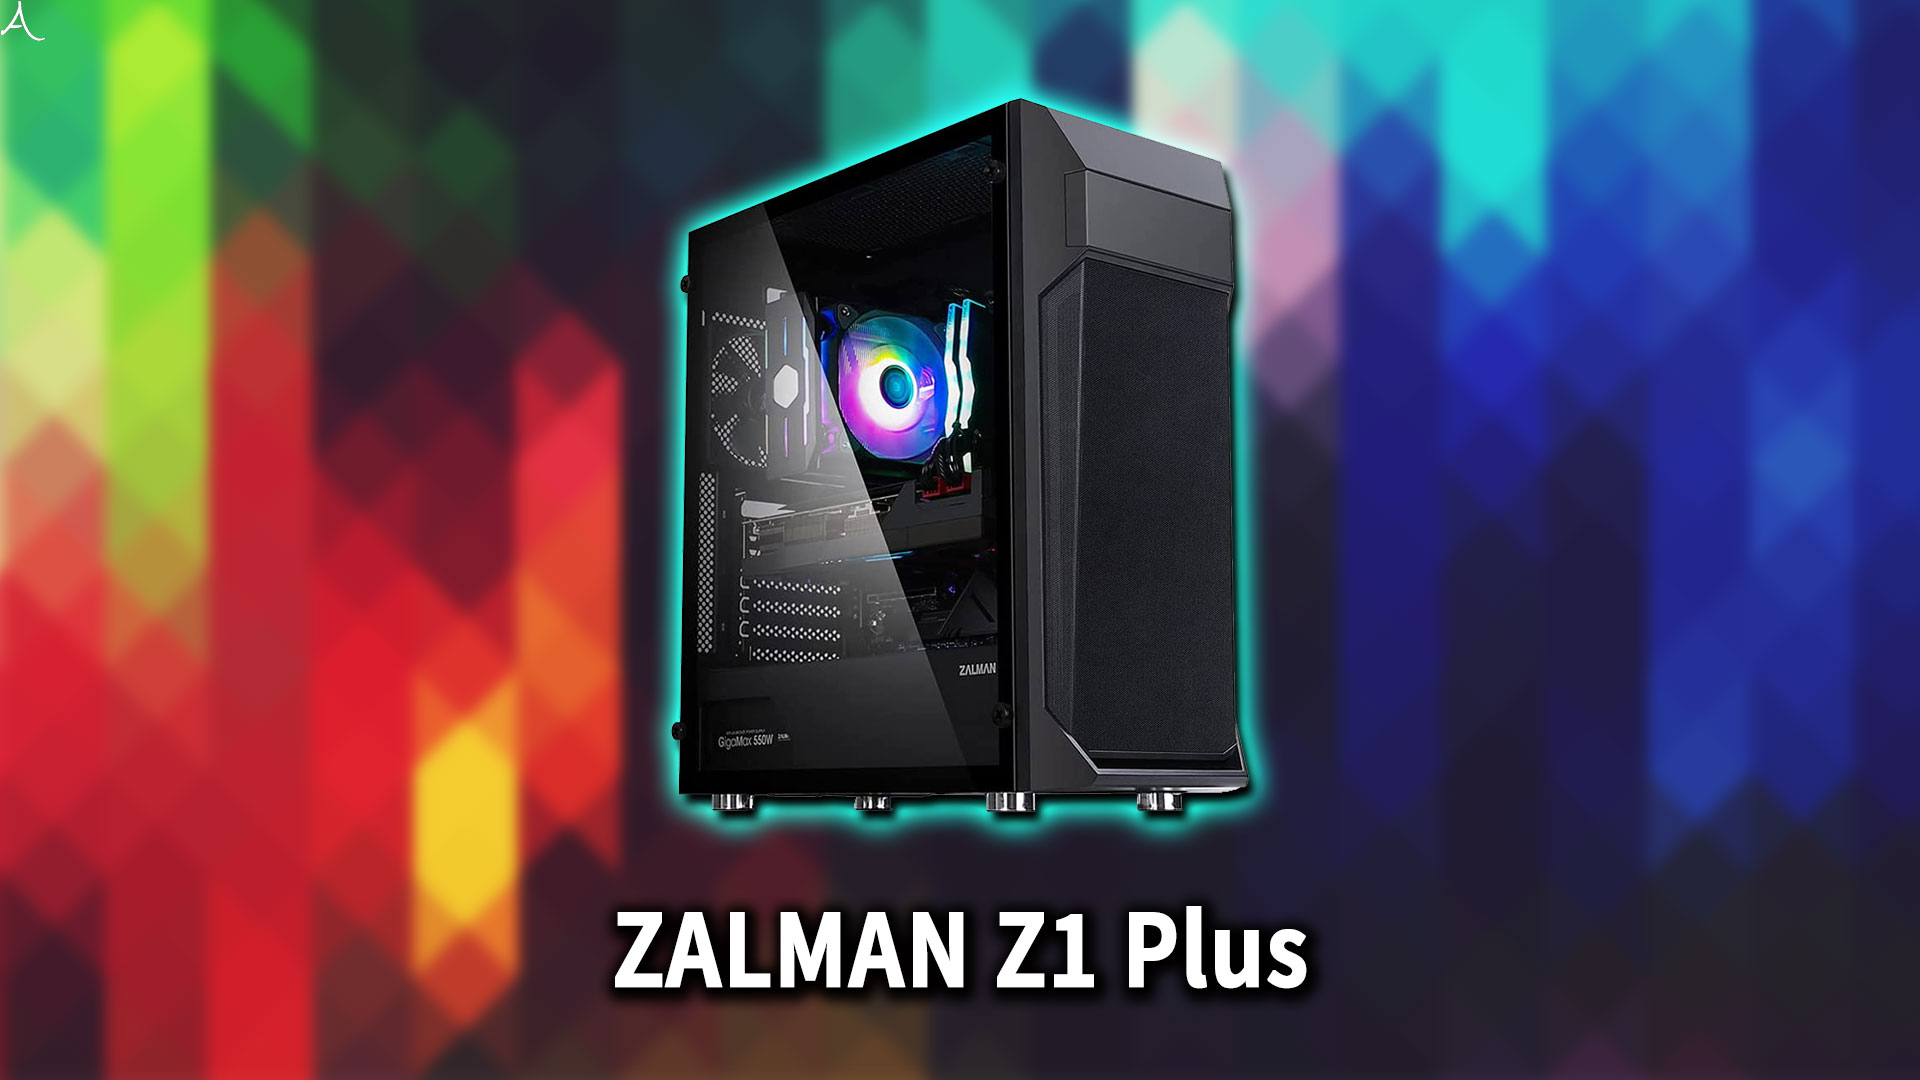 ｢ZALMAN Z1 Plus｣のサイズ・大きさはどれくらい？